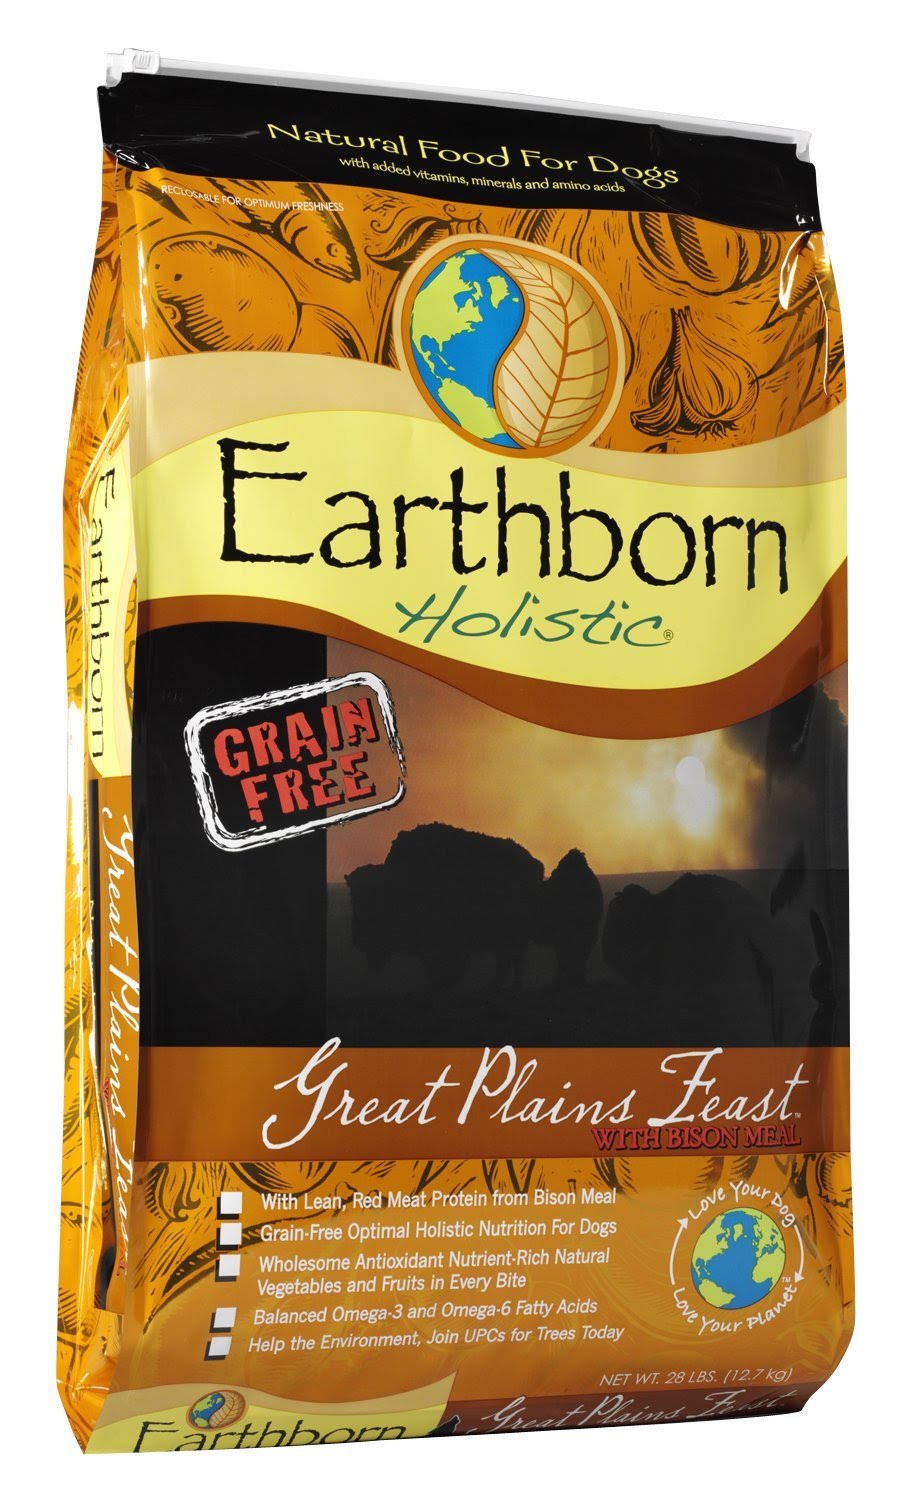 Earthborn Holistic Dog Food - Great Plains Feast